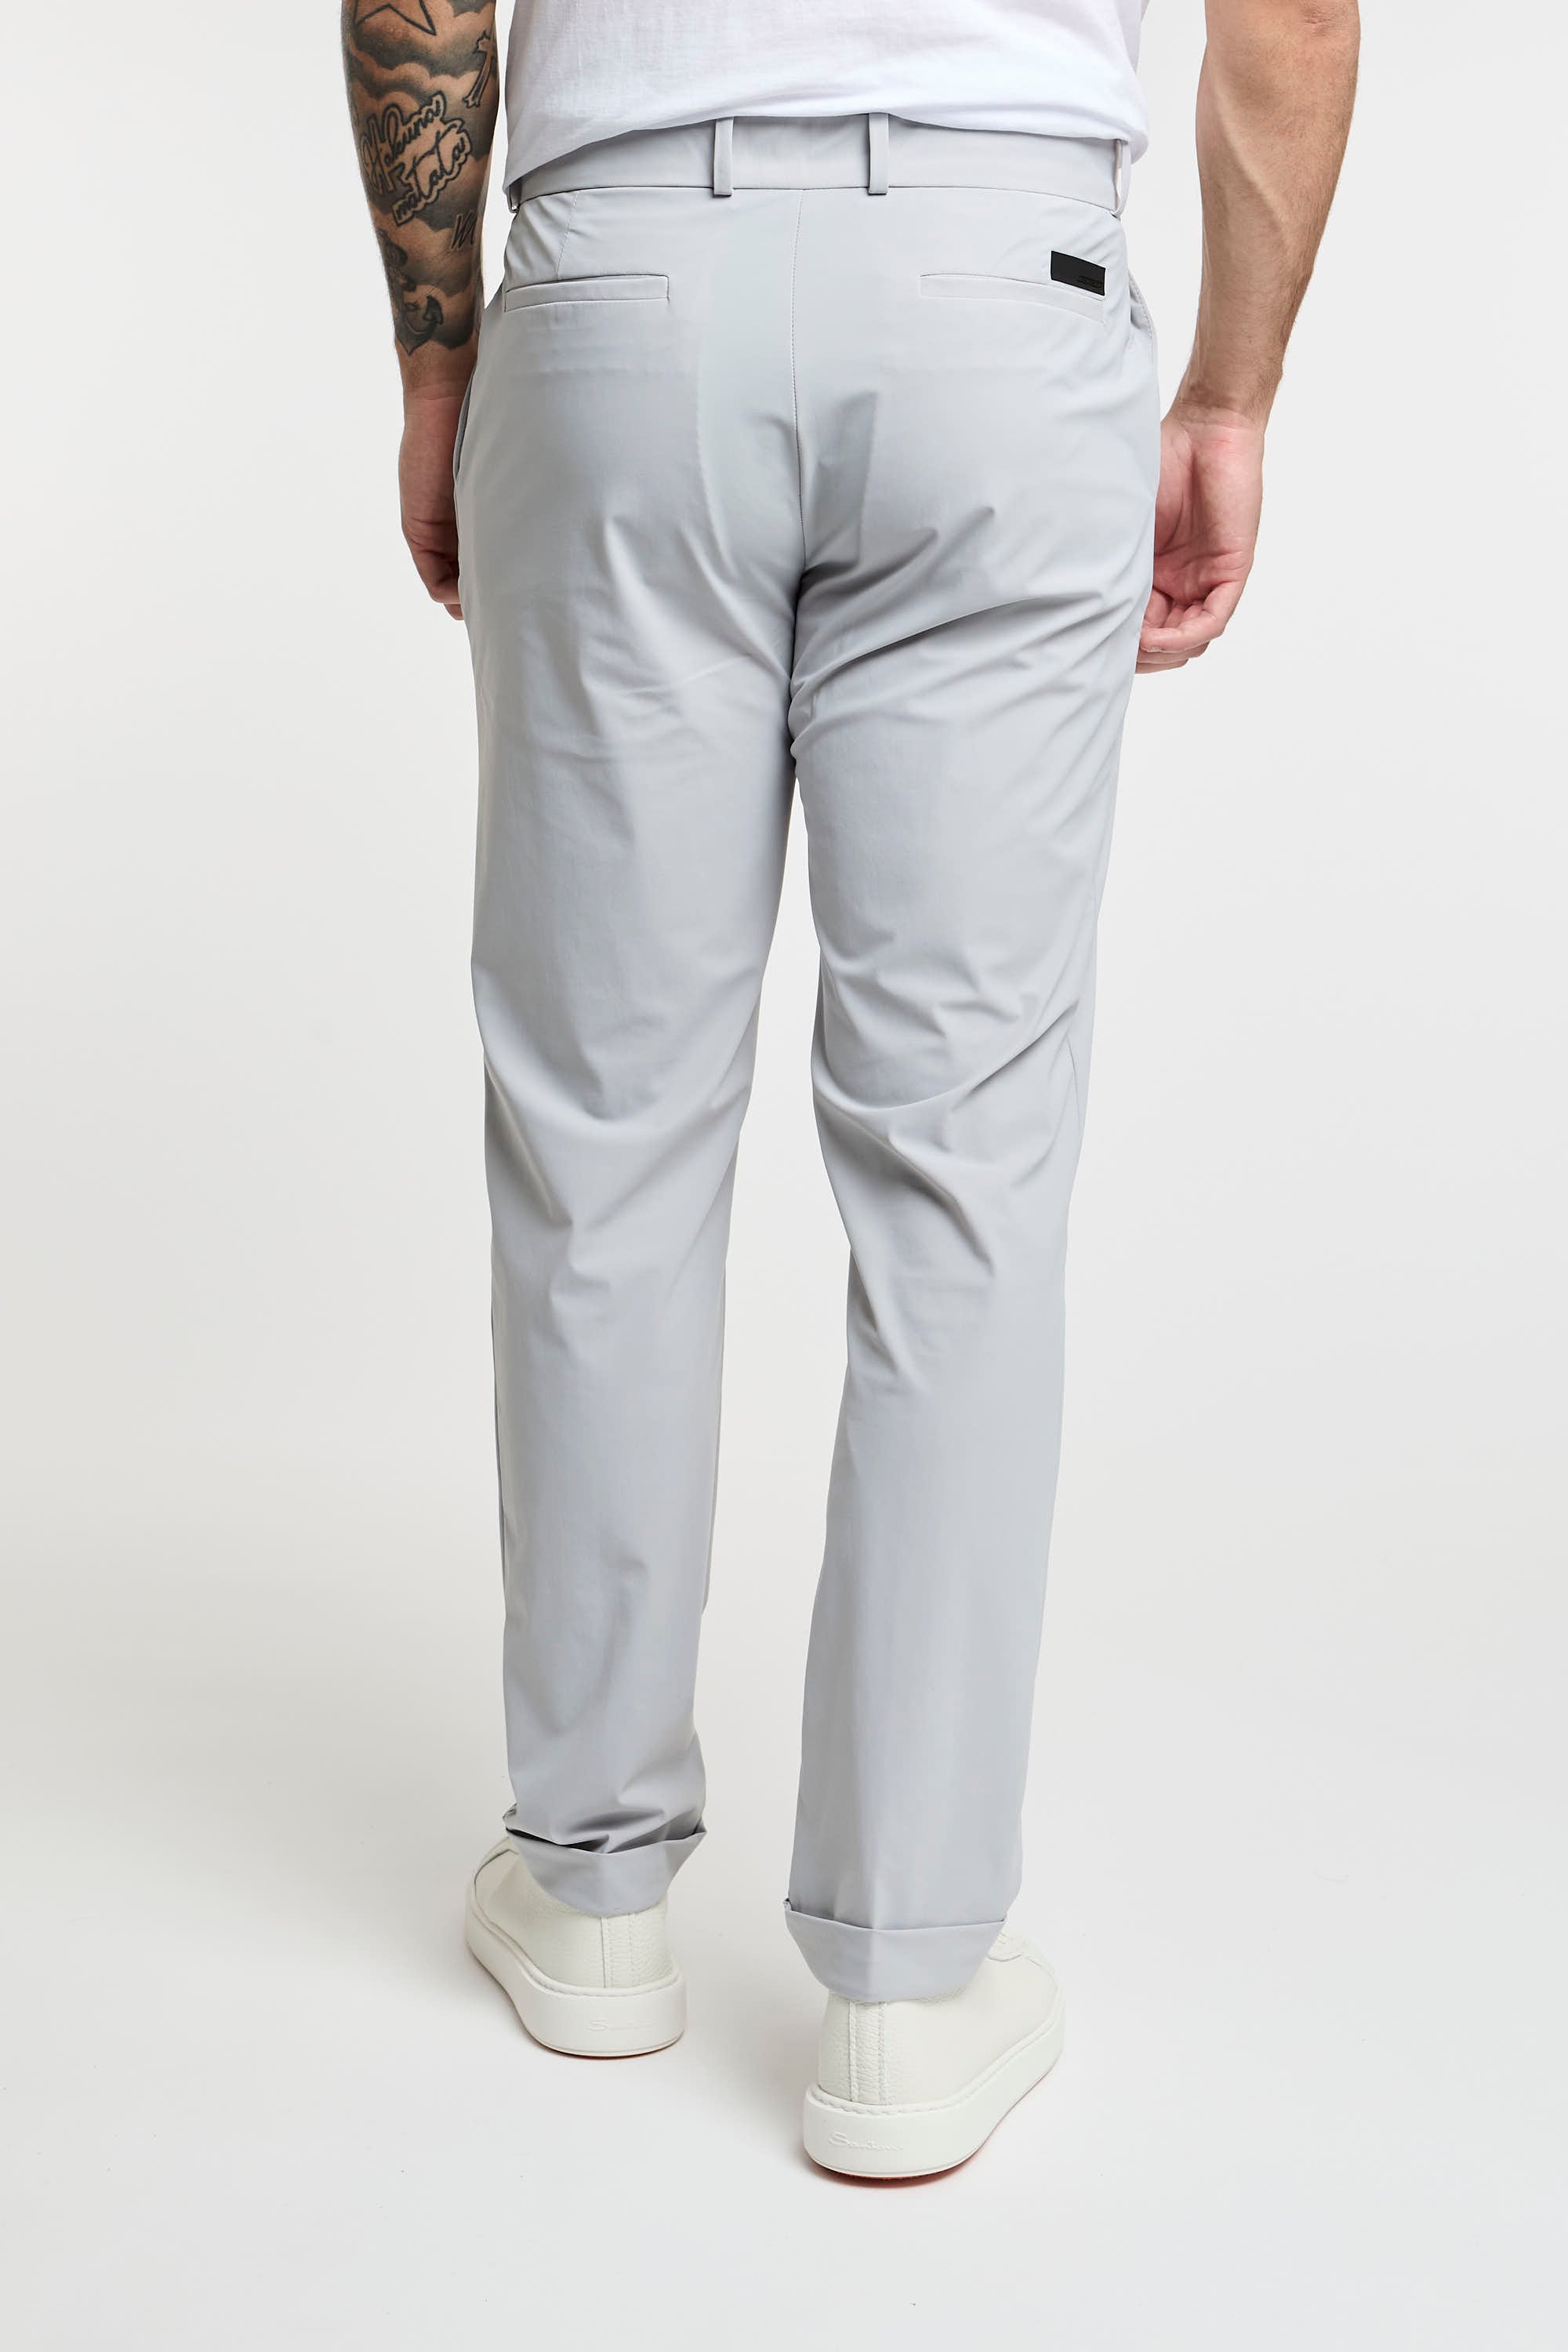 Pantalone Revo Chino-5